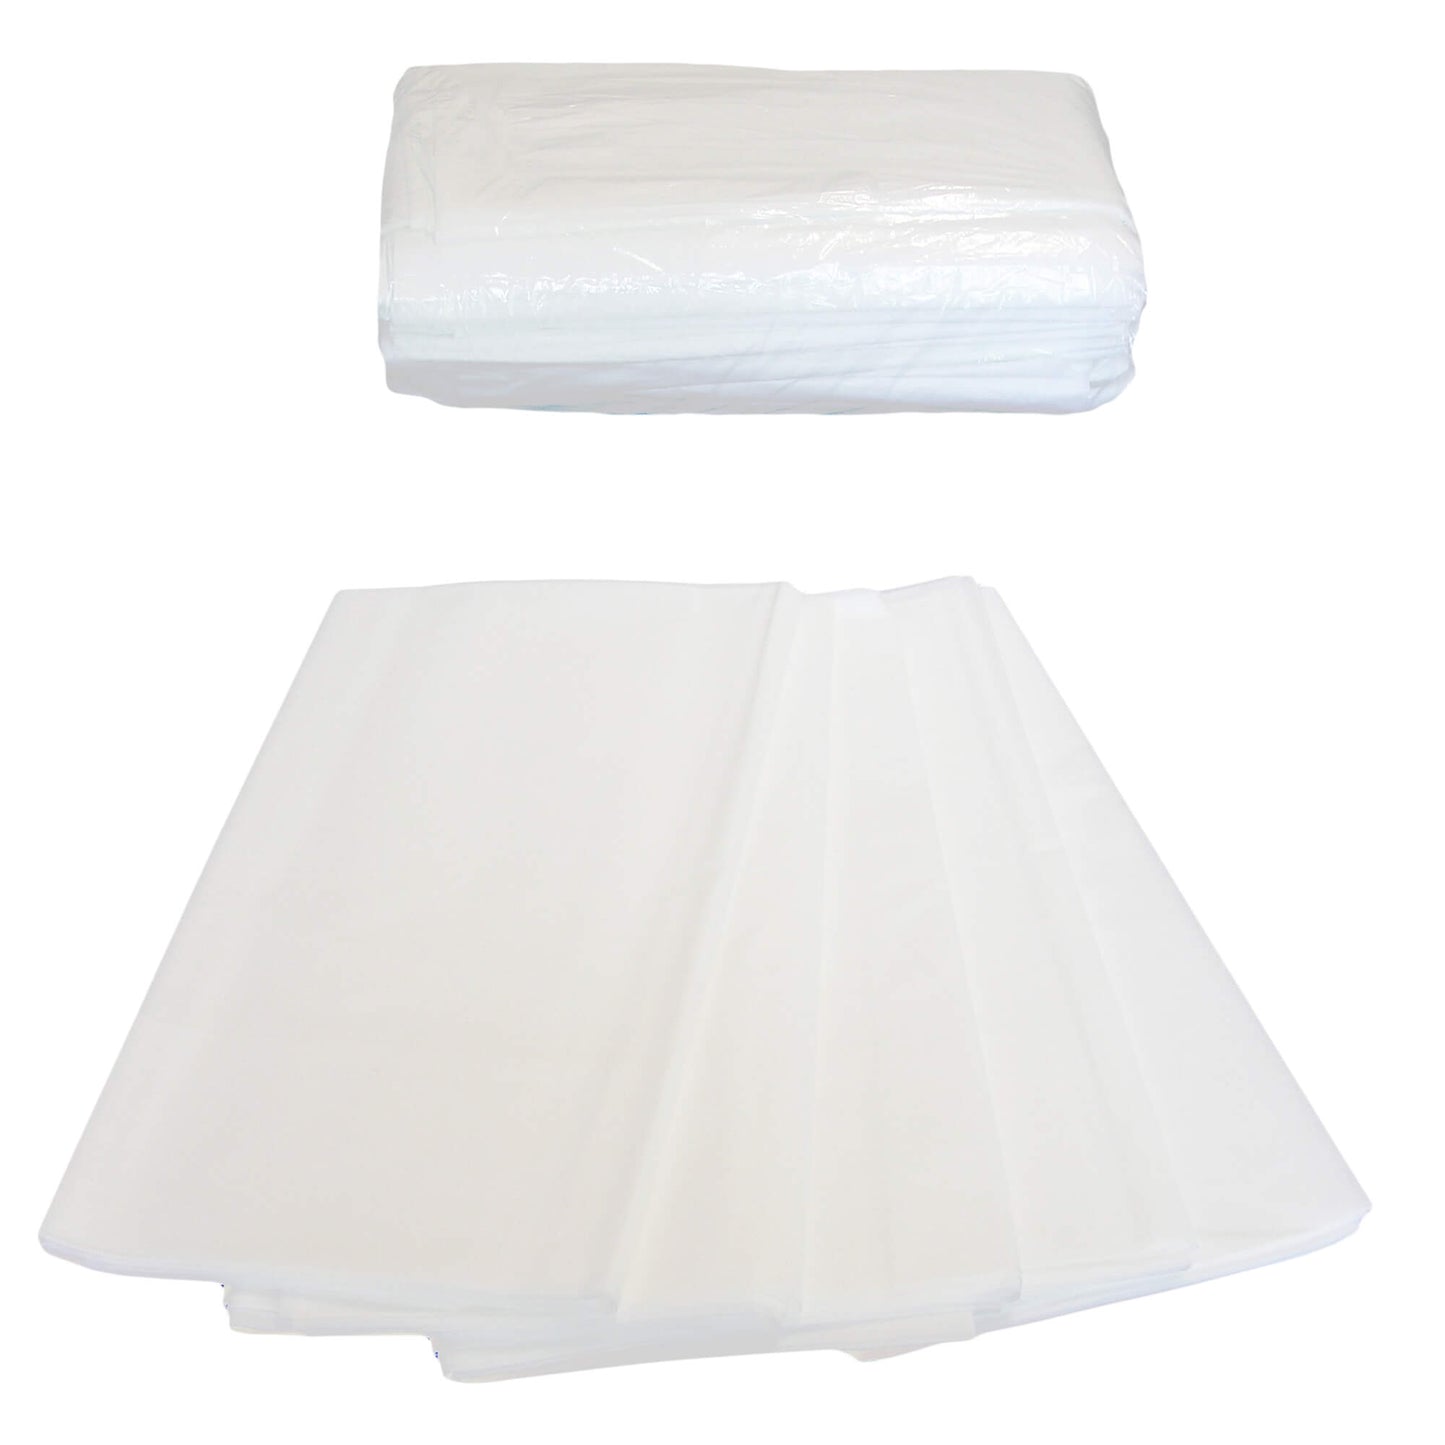 Disposable bed sheets EL1 80x210 cm (laminated)